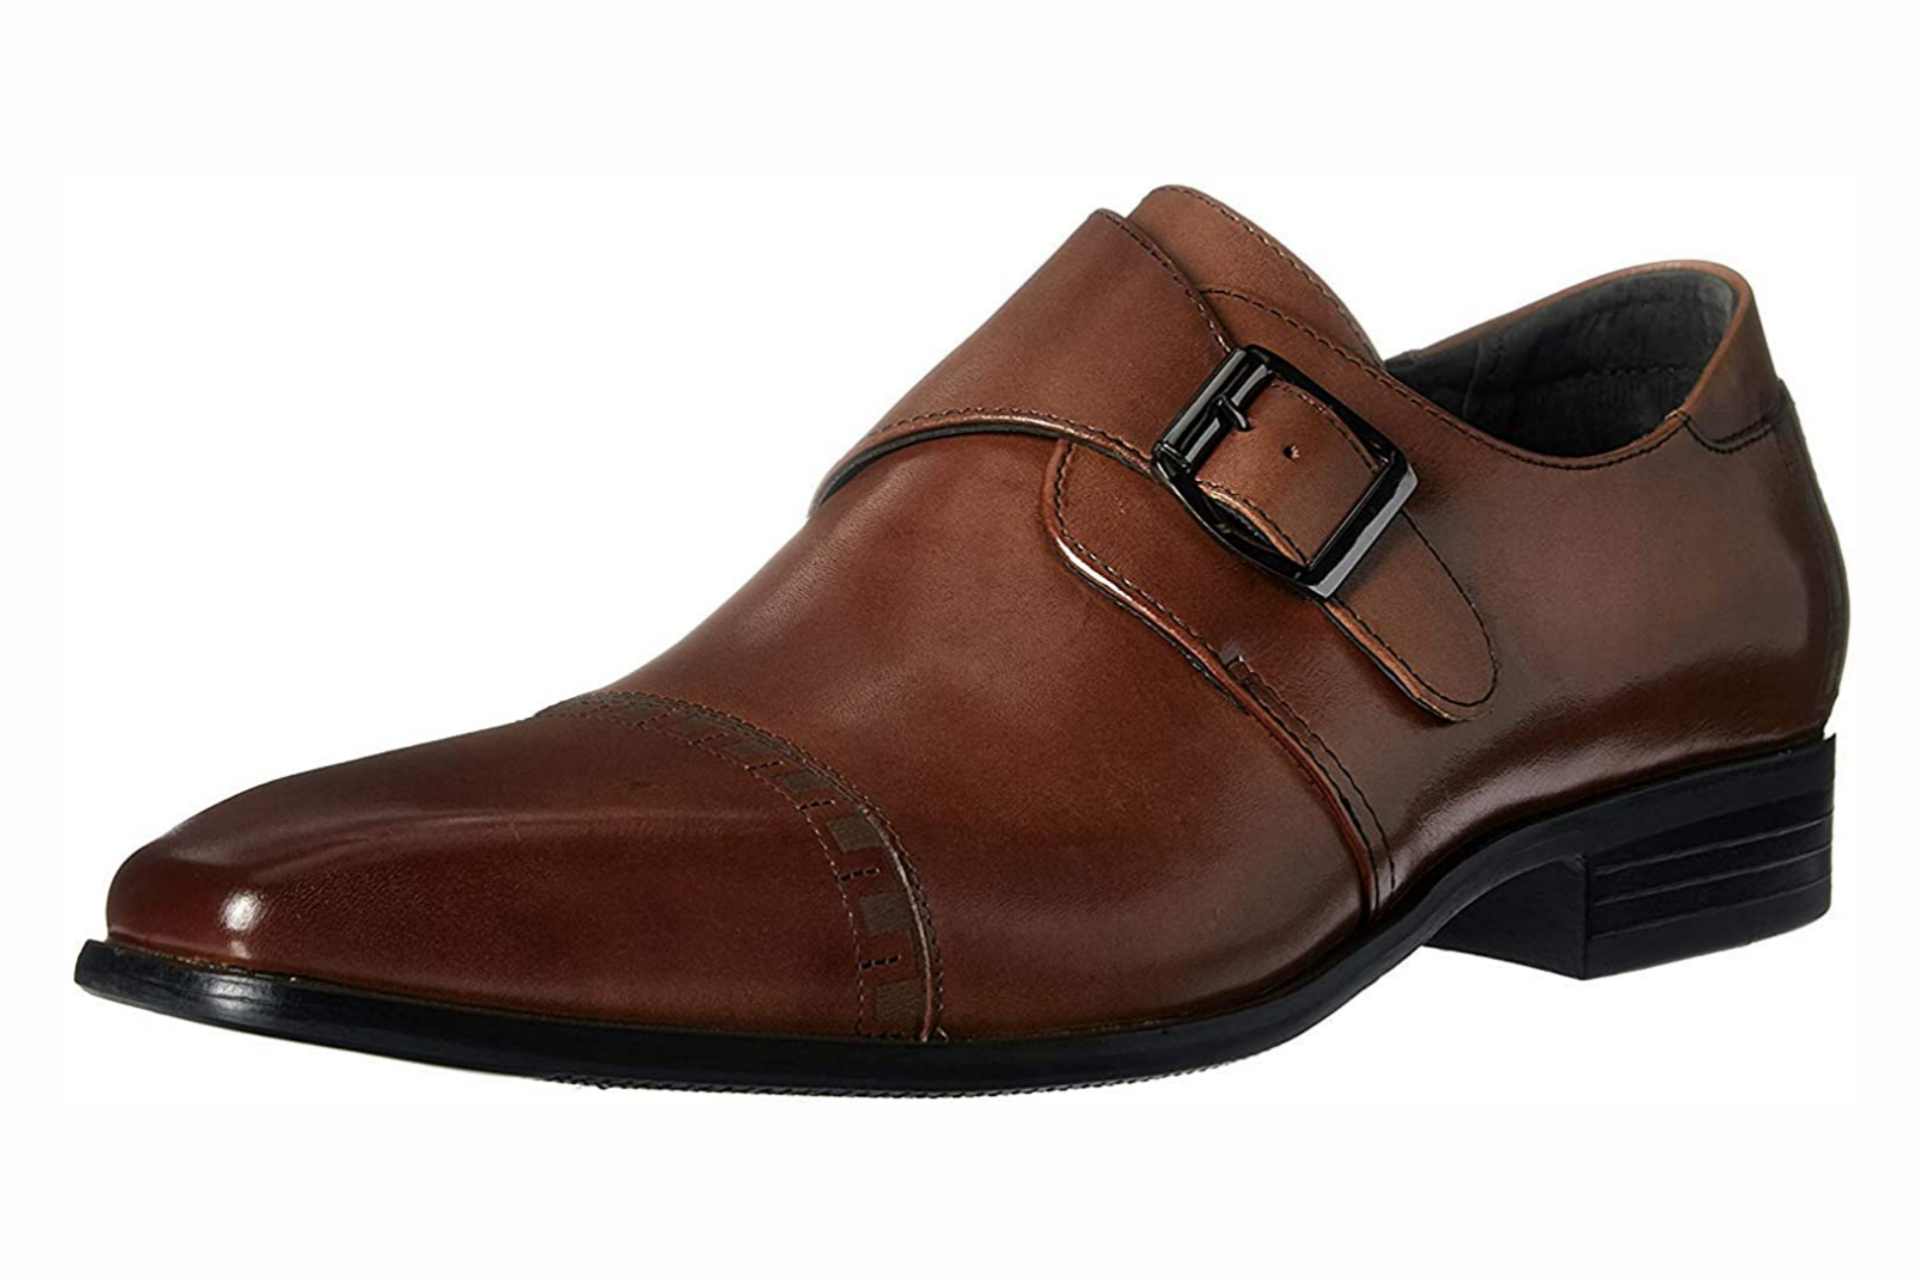 Best men's brown Monk strap shoes for men